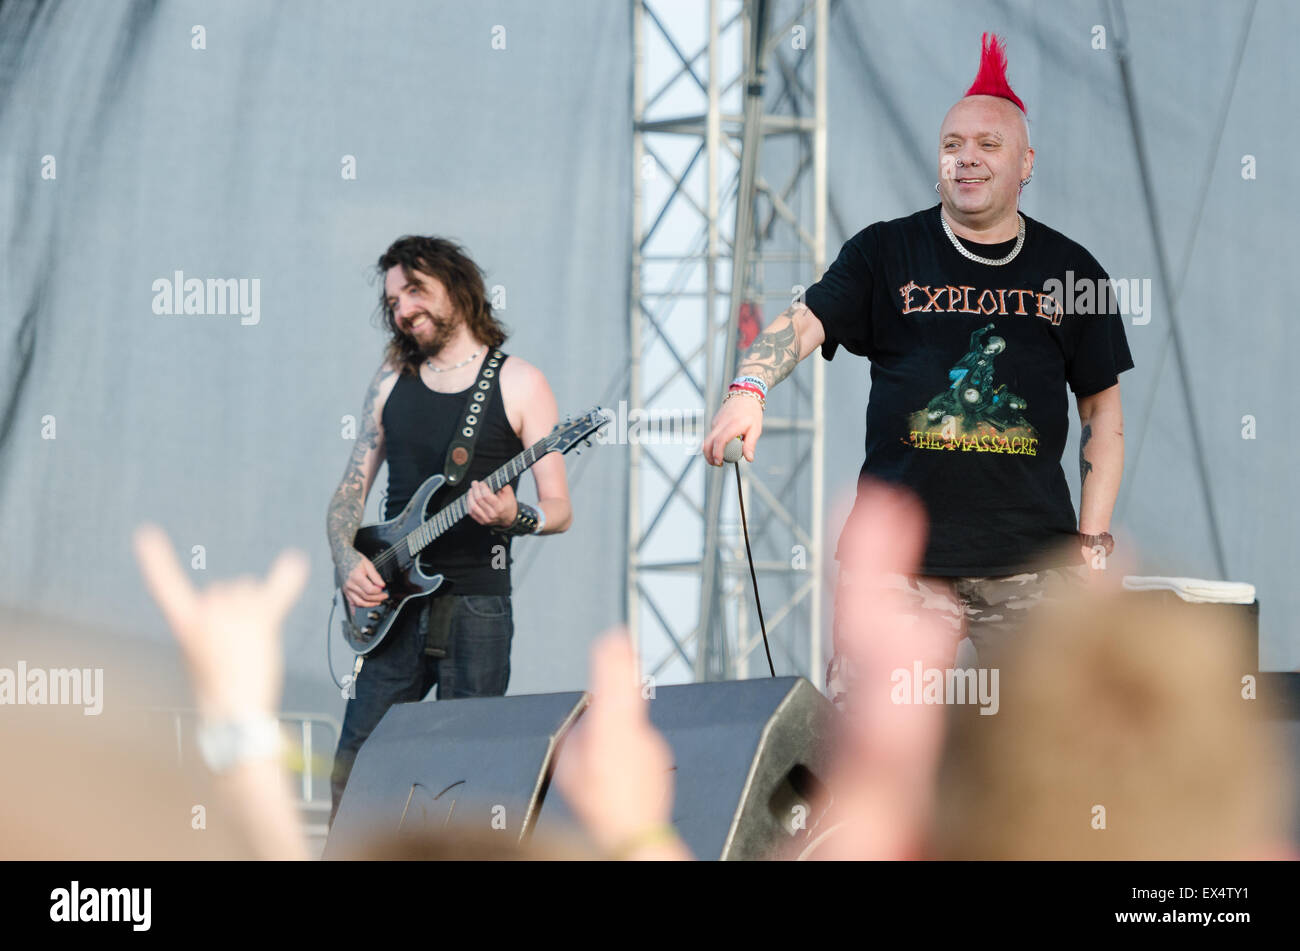 PIESTANY, Eslovaquia - 26 de junio de 2015: La banda de punk rock escocés explotados realiza el festival de música en Piestany Topfest Foto de stock